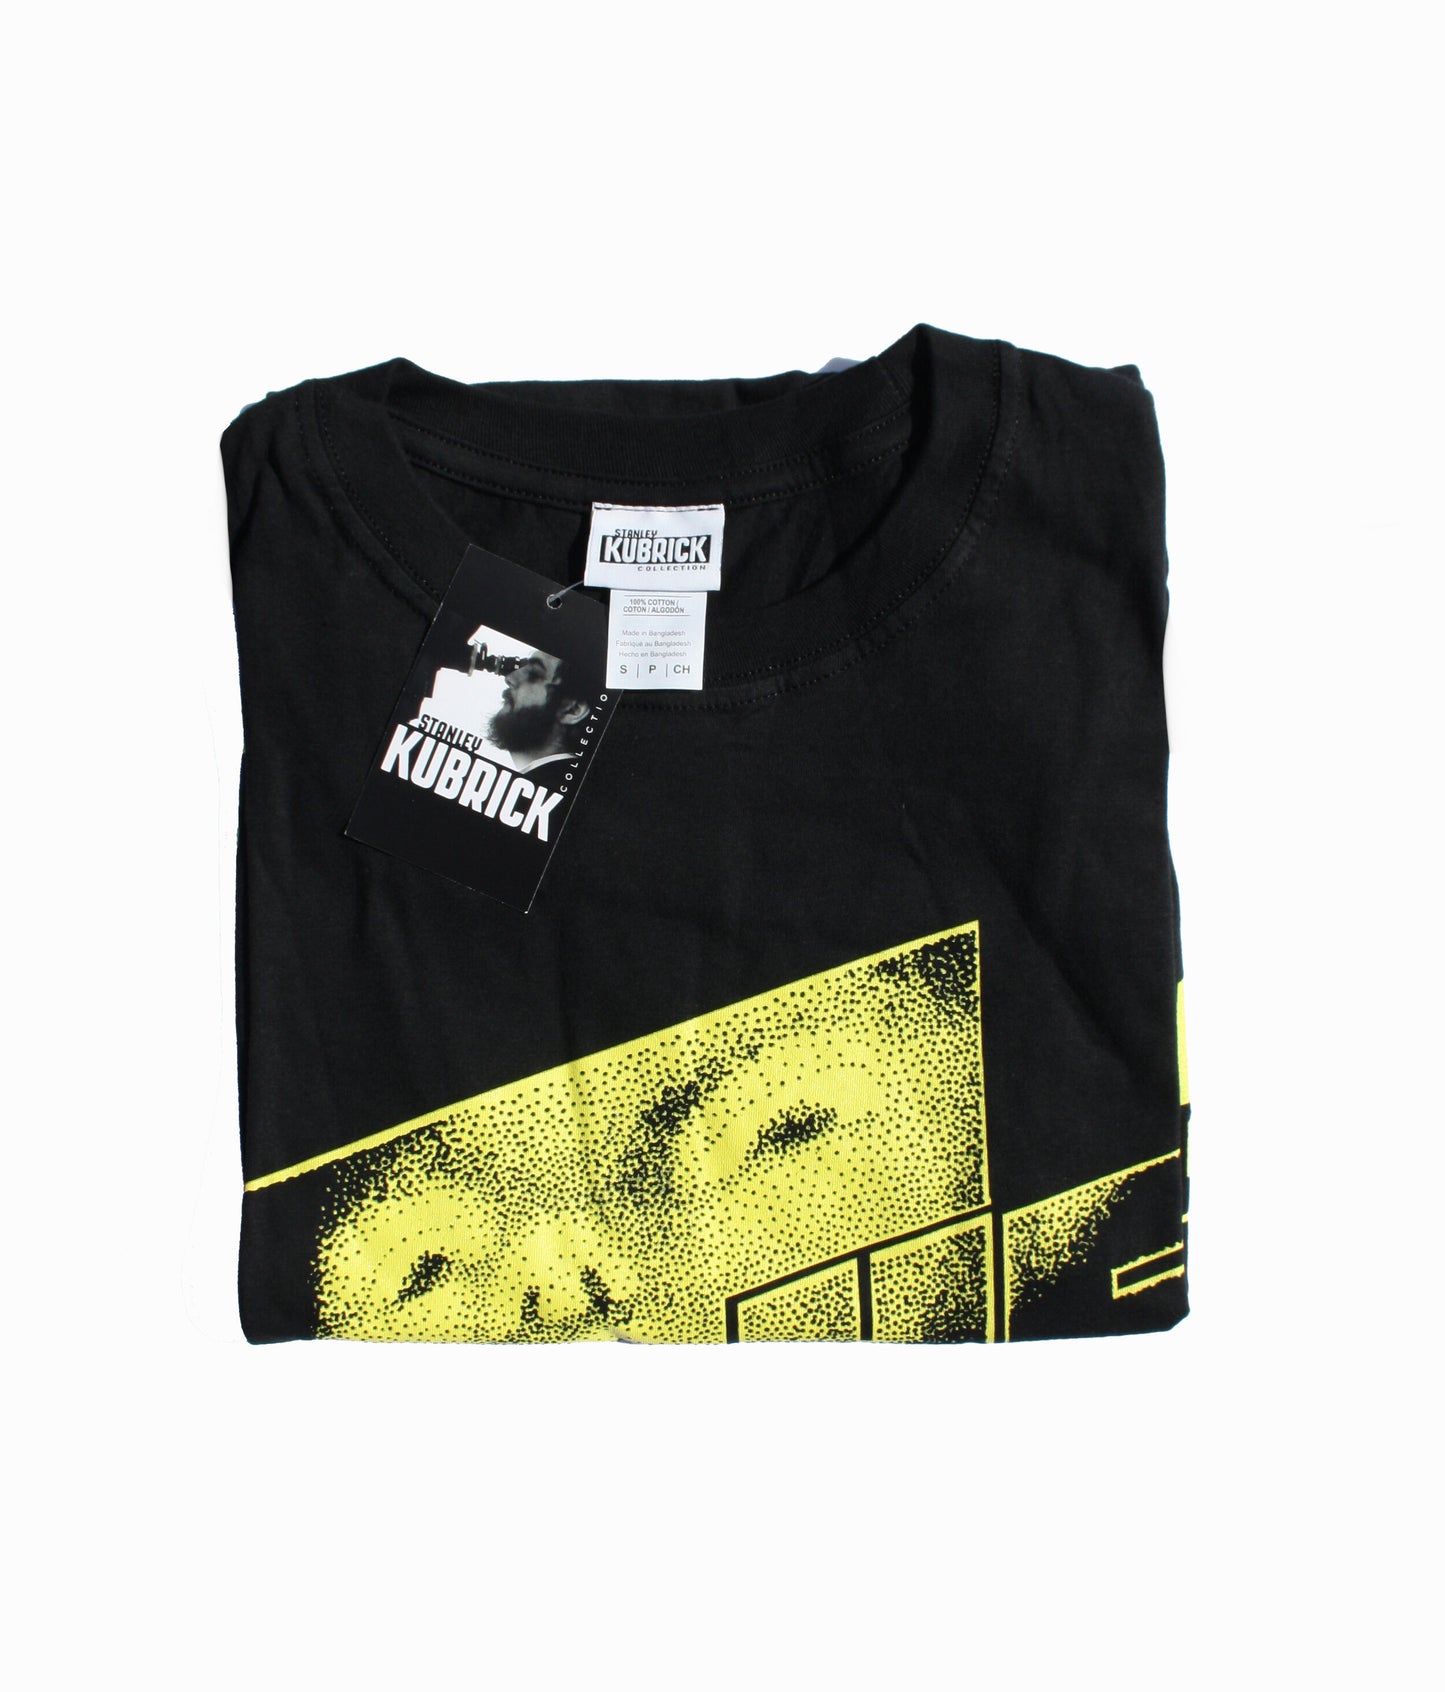 The Shining - Yellow Logo Unisex T-Shirt